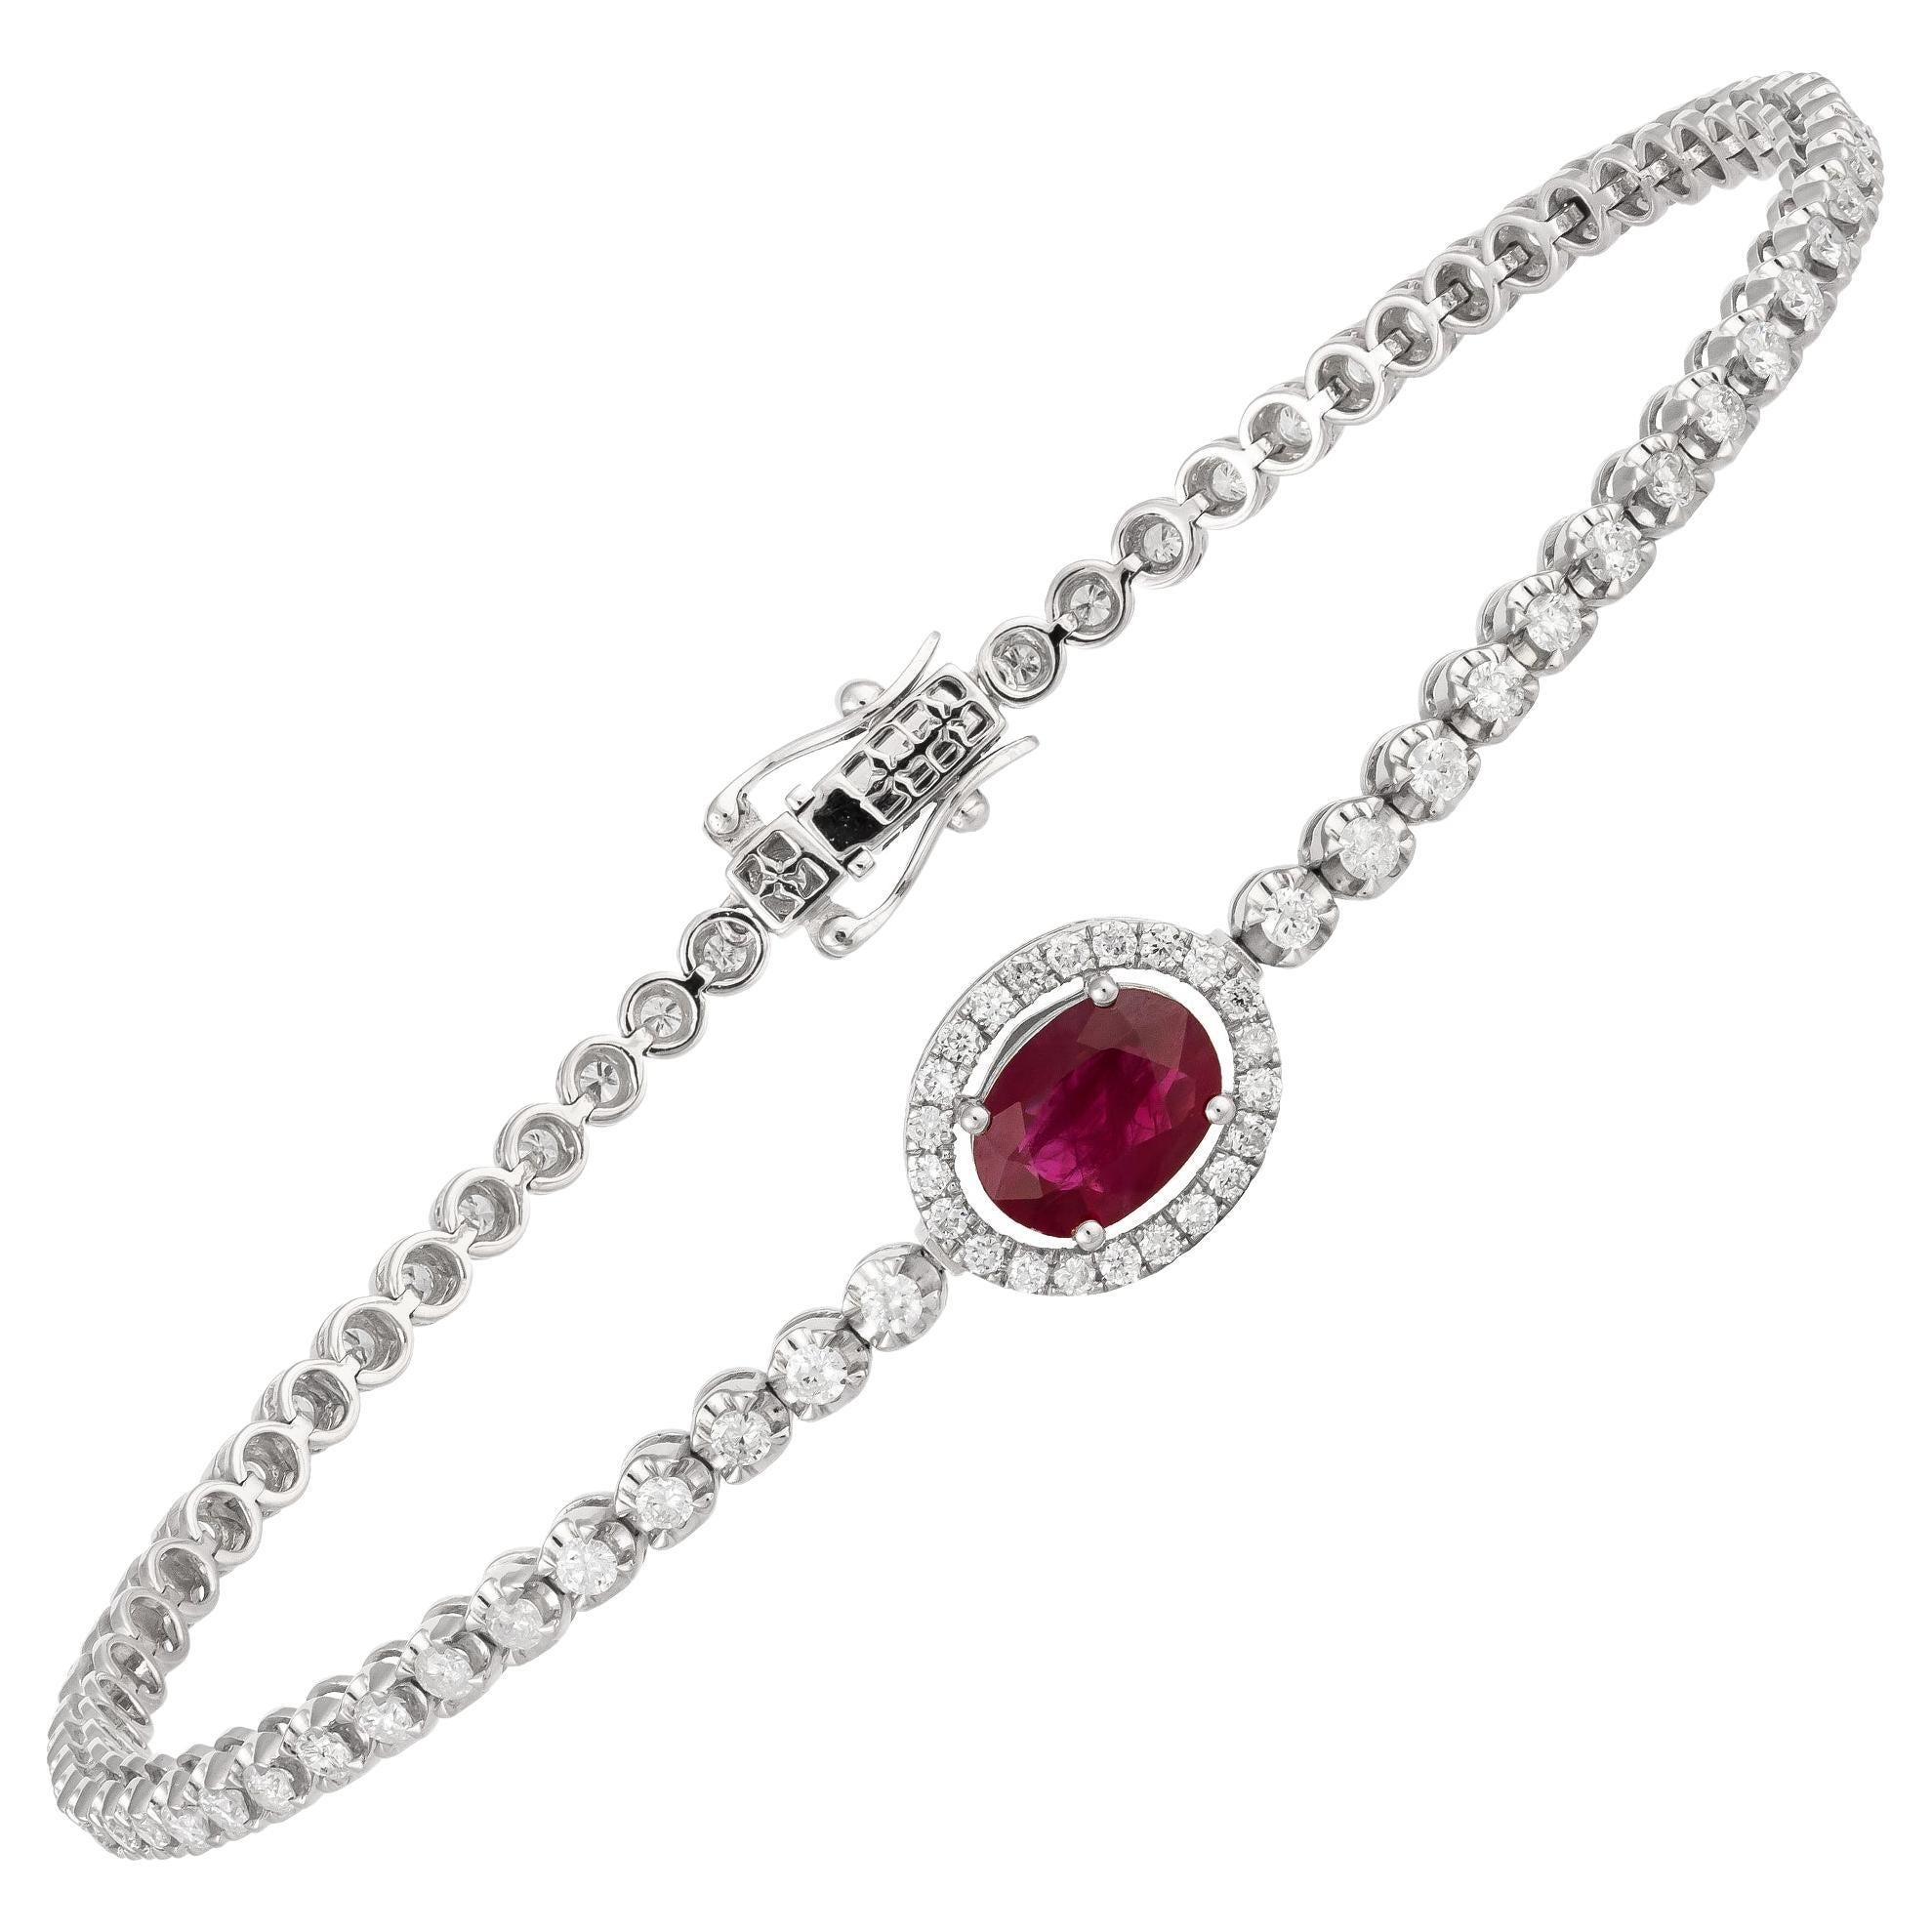 Unique White Gold 18K Ruby Bracelet Diamond for Her For Sale